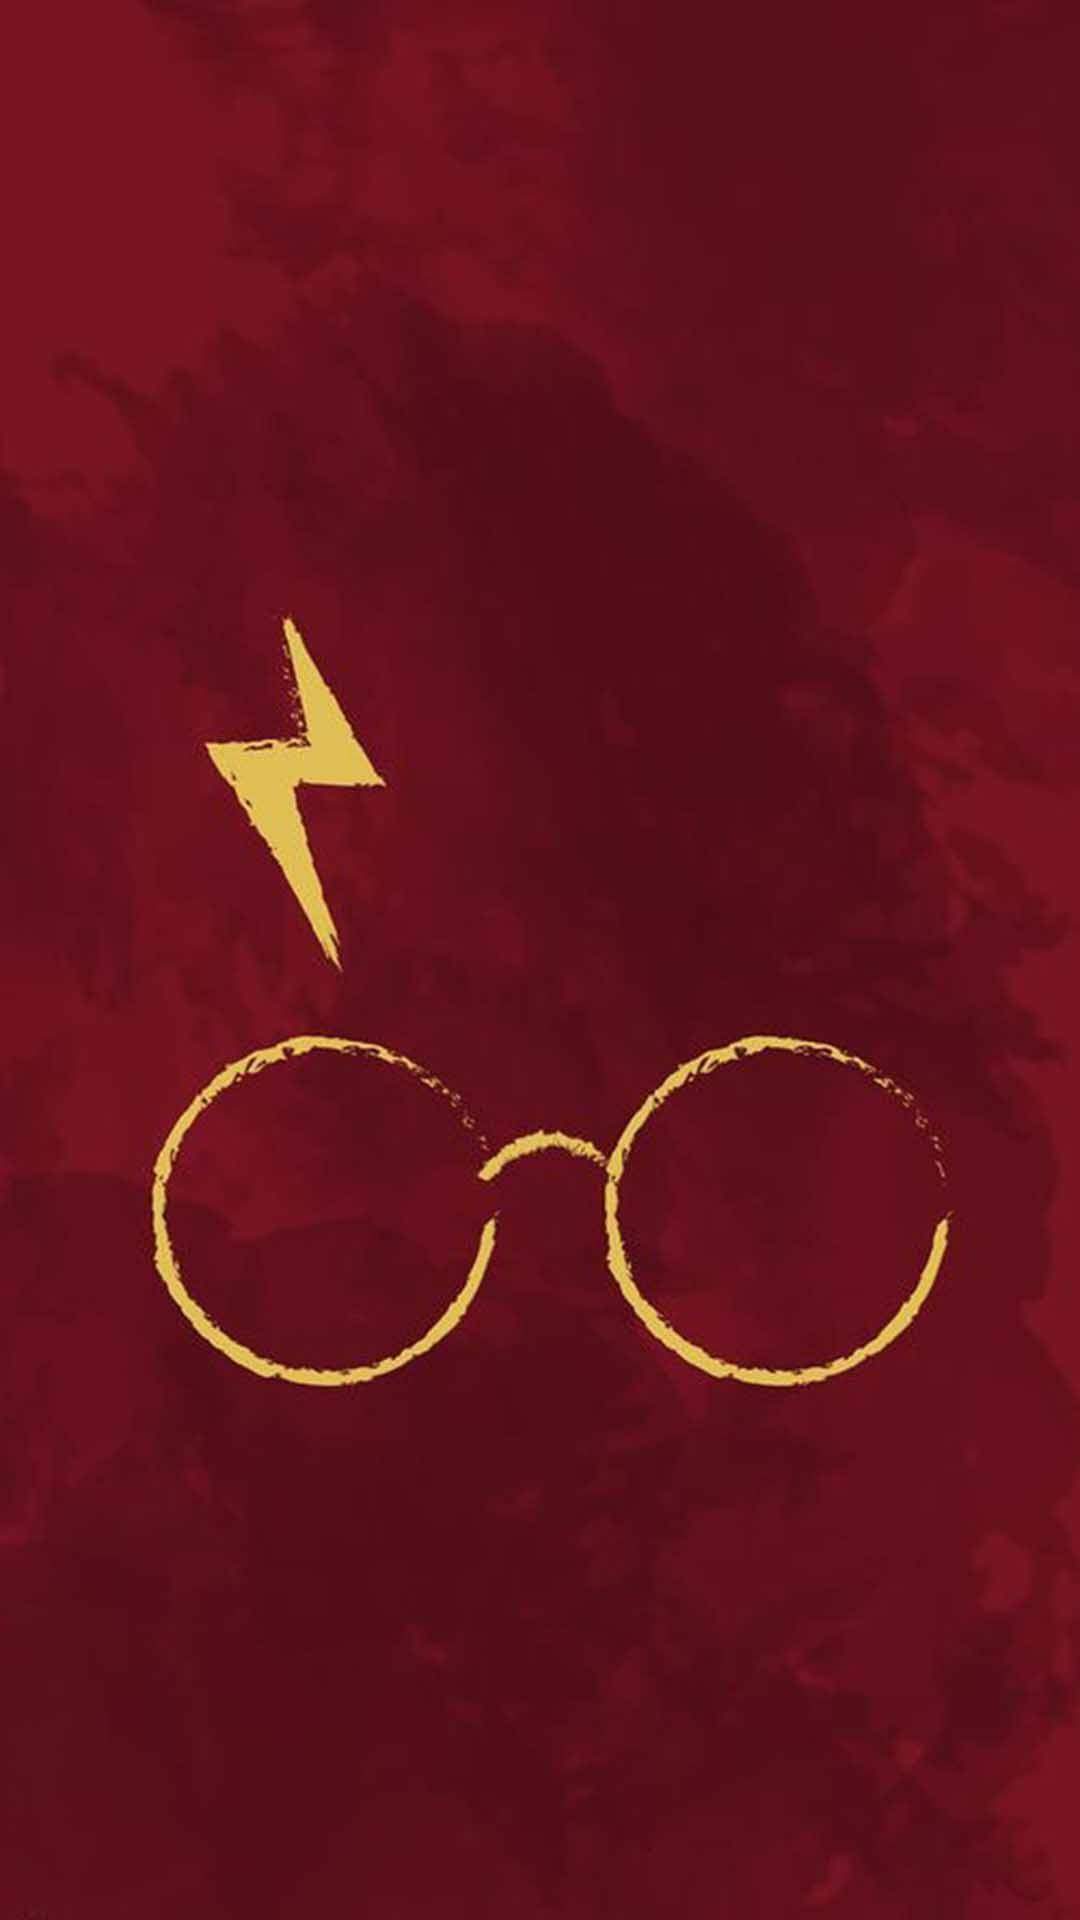 Free Harry Potter Aesthetic Wallpaper Downloads, [200+] Harry Potter  Aesthetic Wallpapers for FREE 